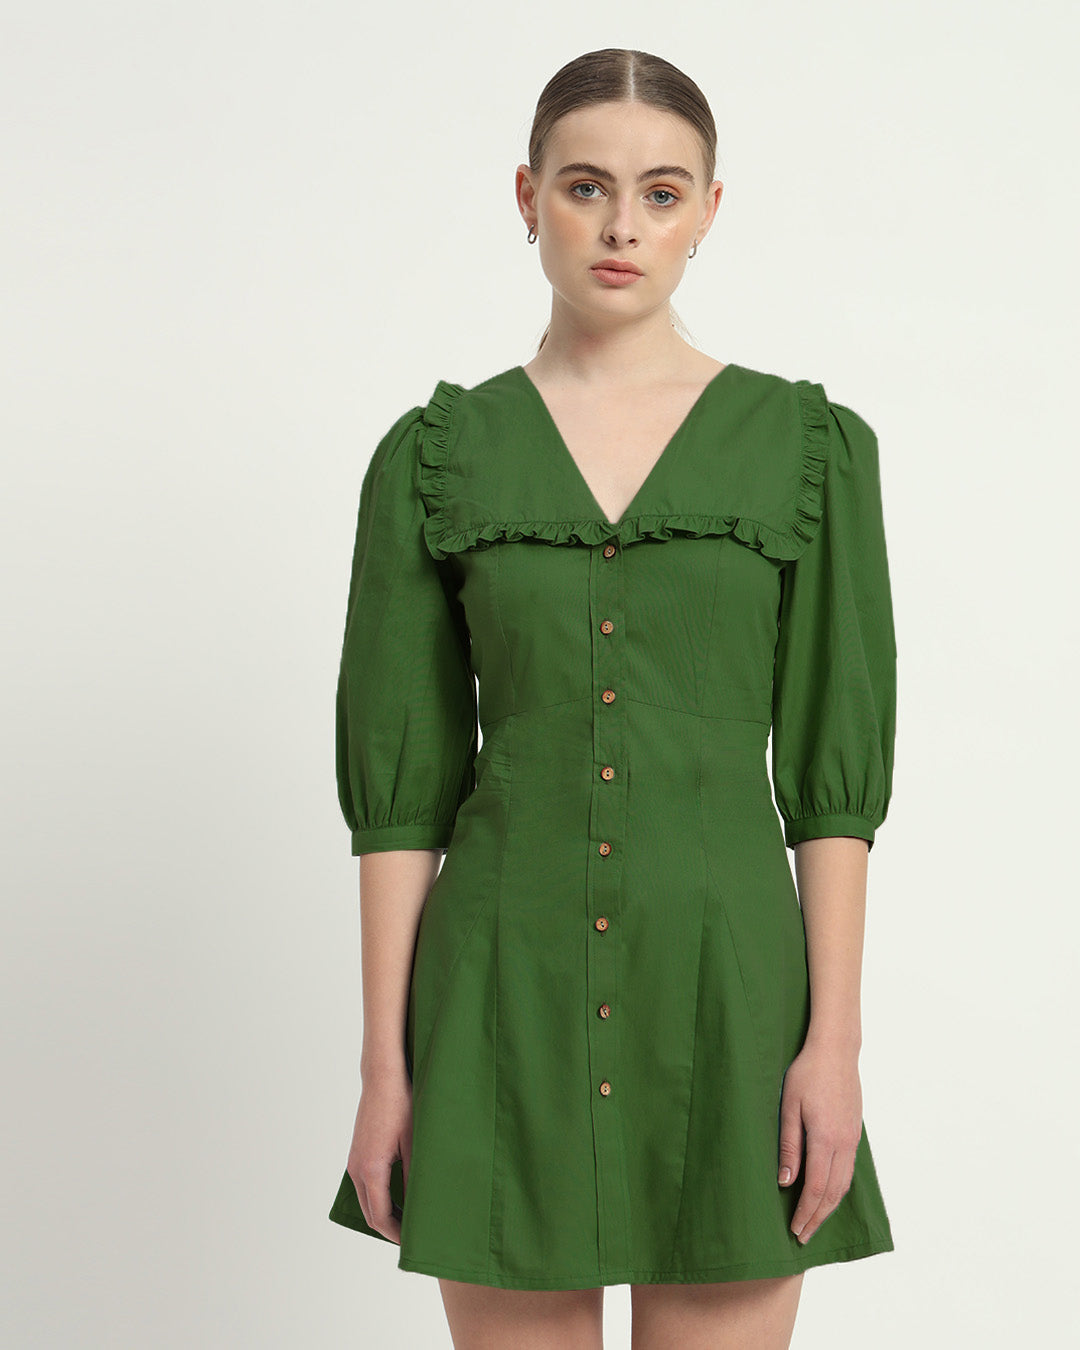 The Isabela Emerald Cotton Dress